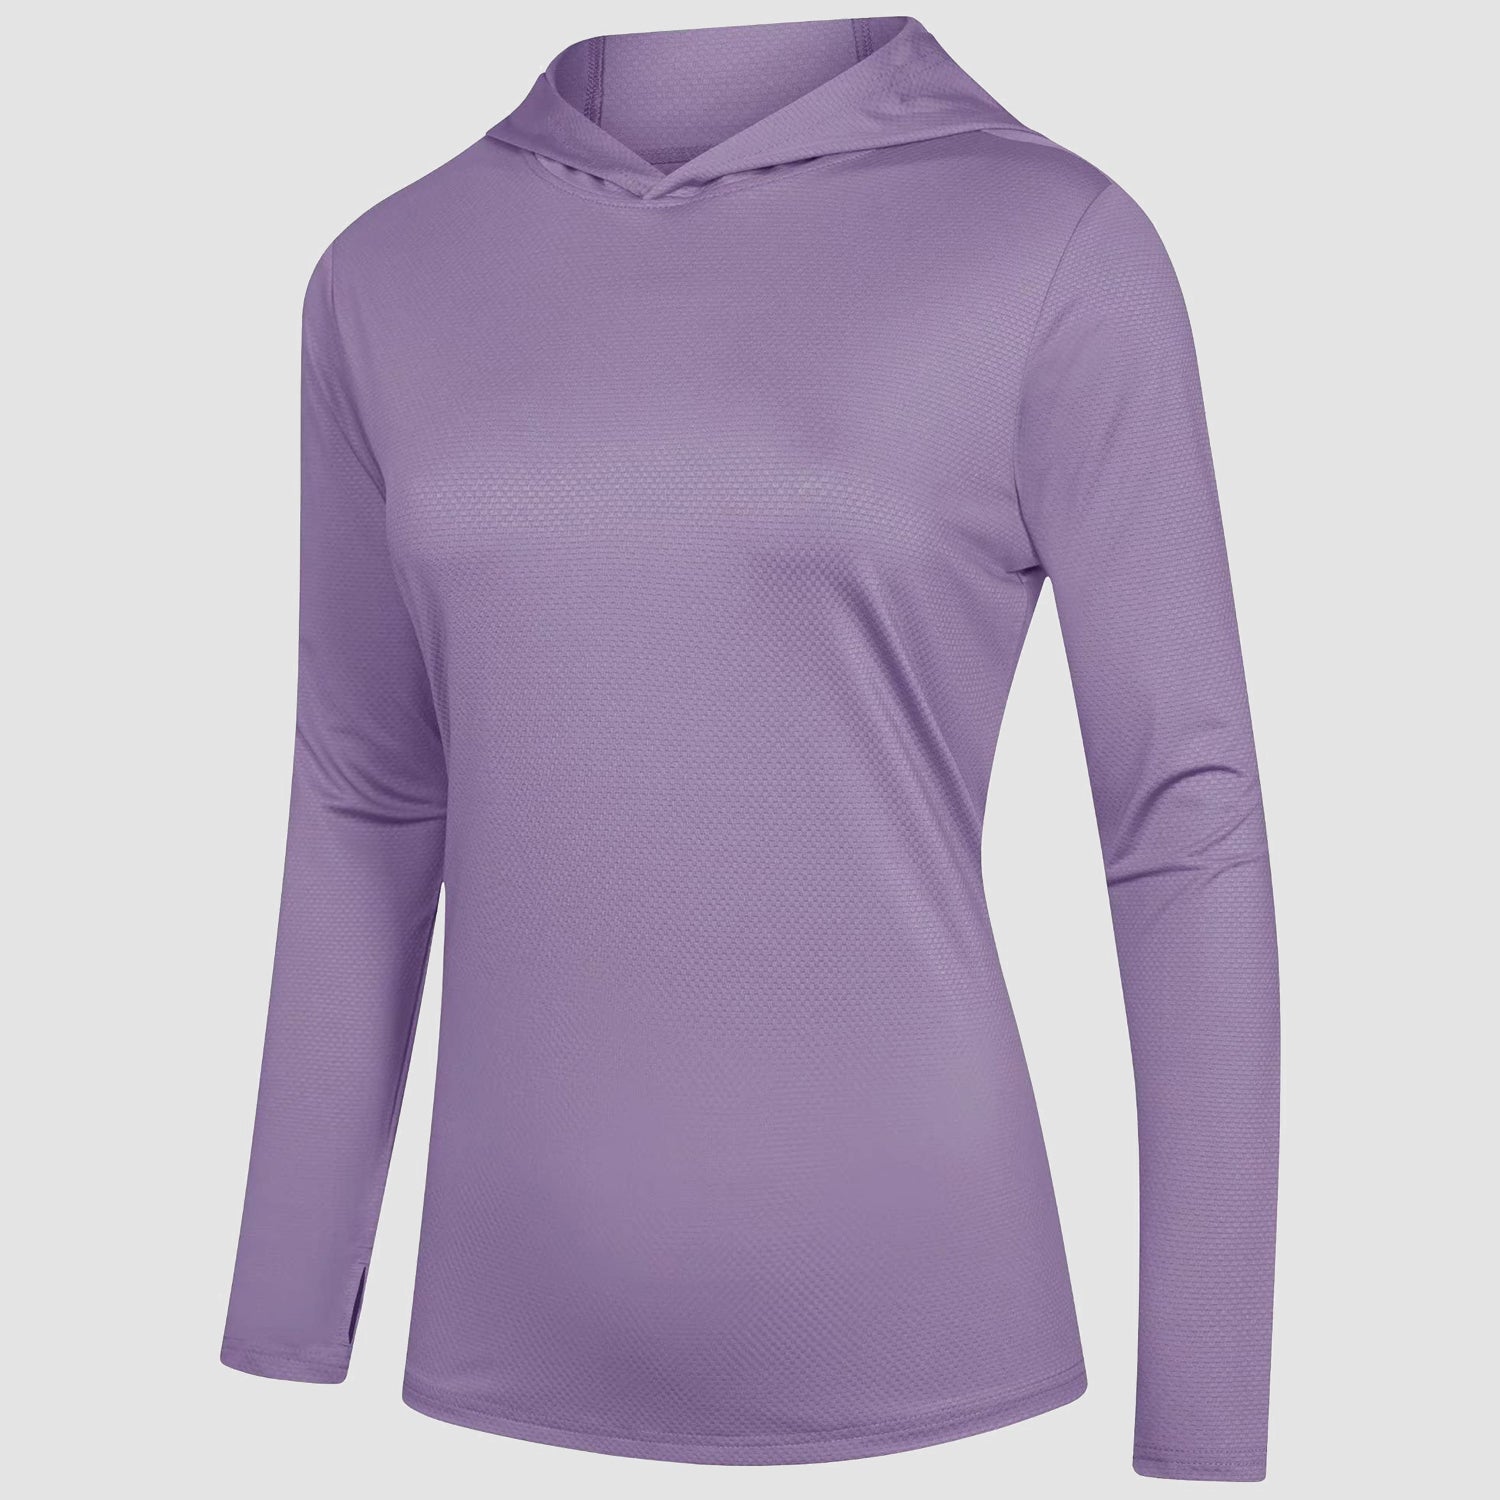 Women's Hoodie Shirts UPF 50+ Sun Protection Long Sleeve UV Shirt Fishing Hiking Athletic Shirts with Thumb Hole, Light Purple / M